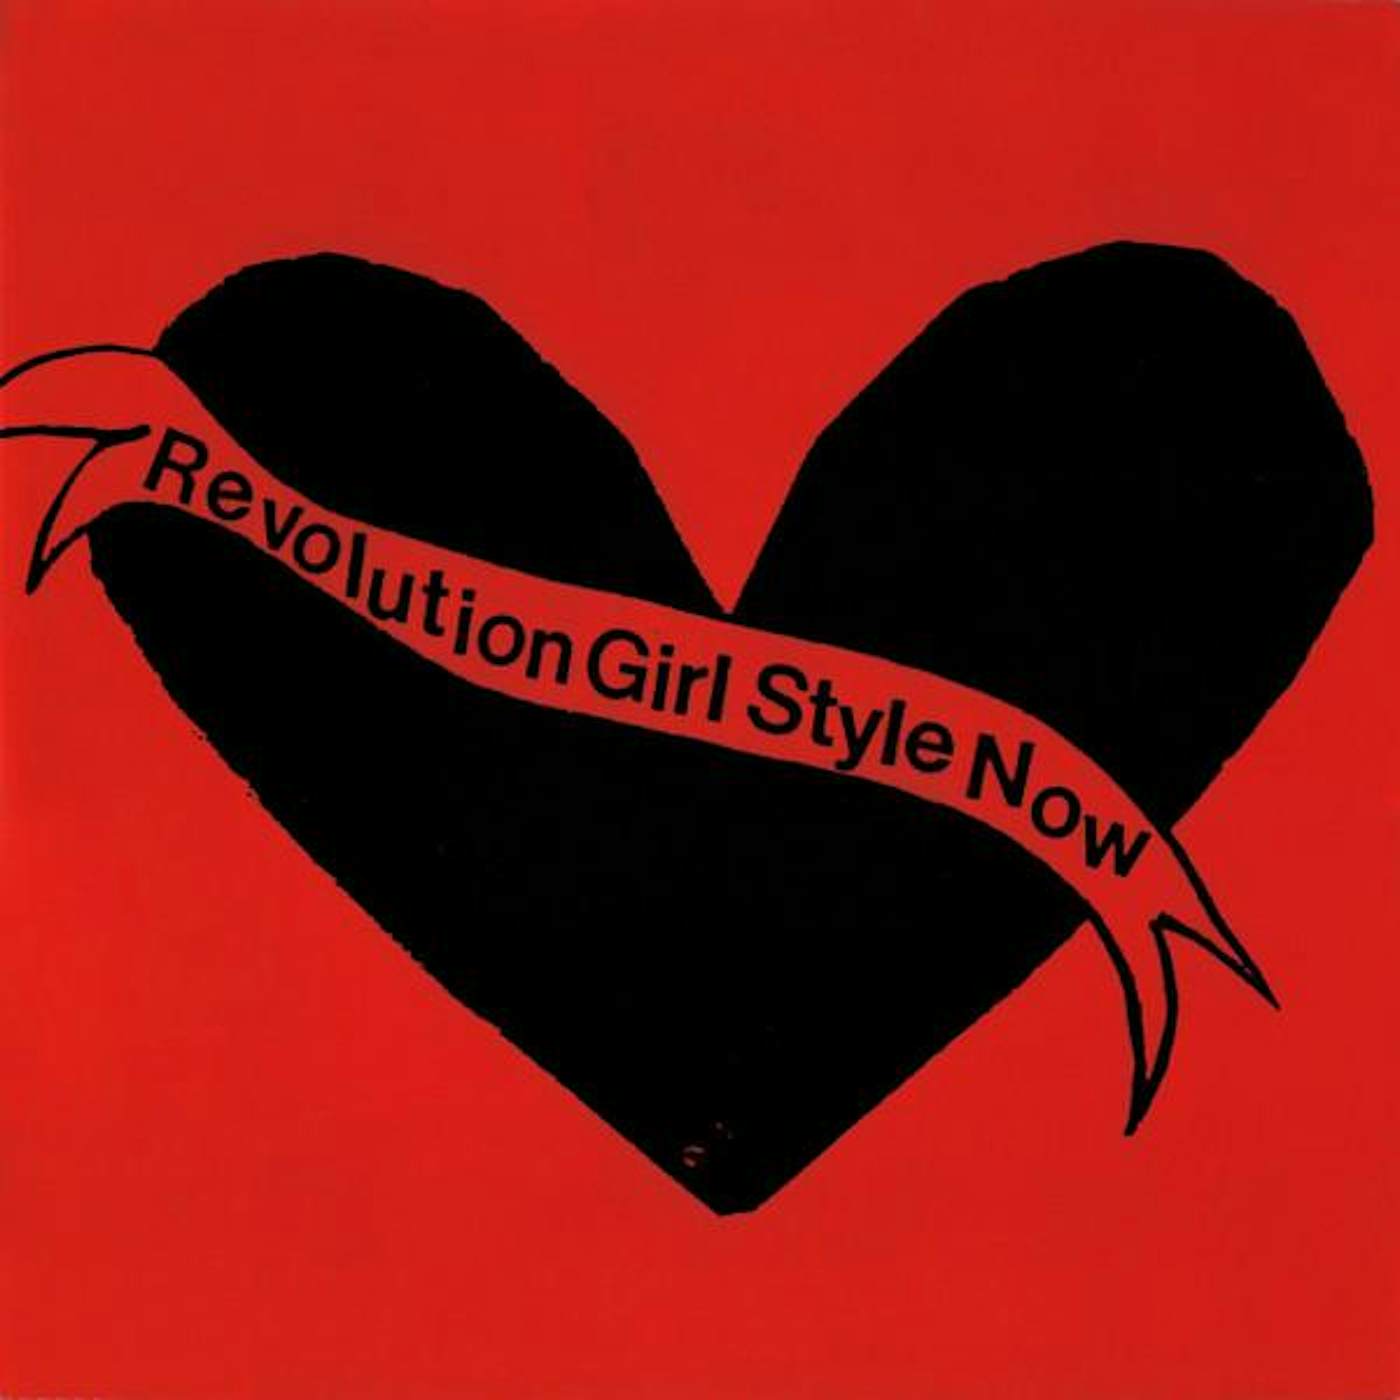 Bikini Kill Revolution Girl Style Now vinyl record